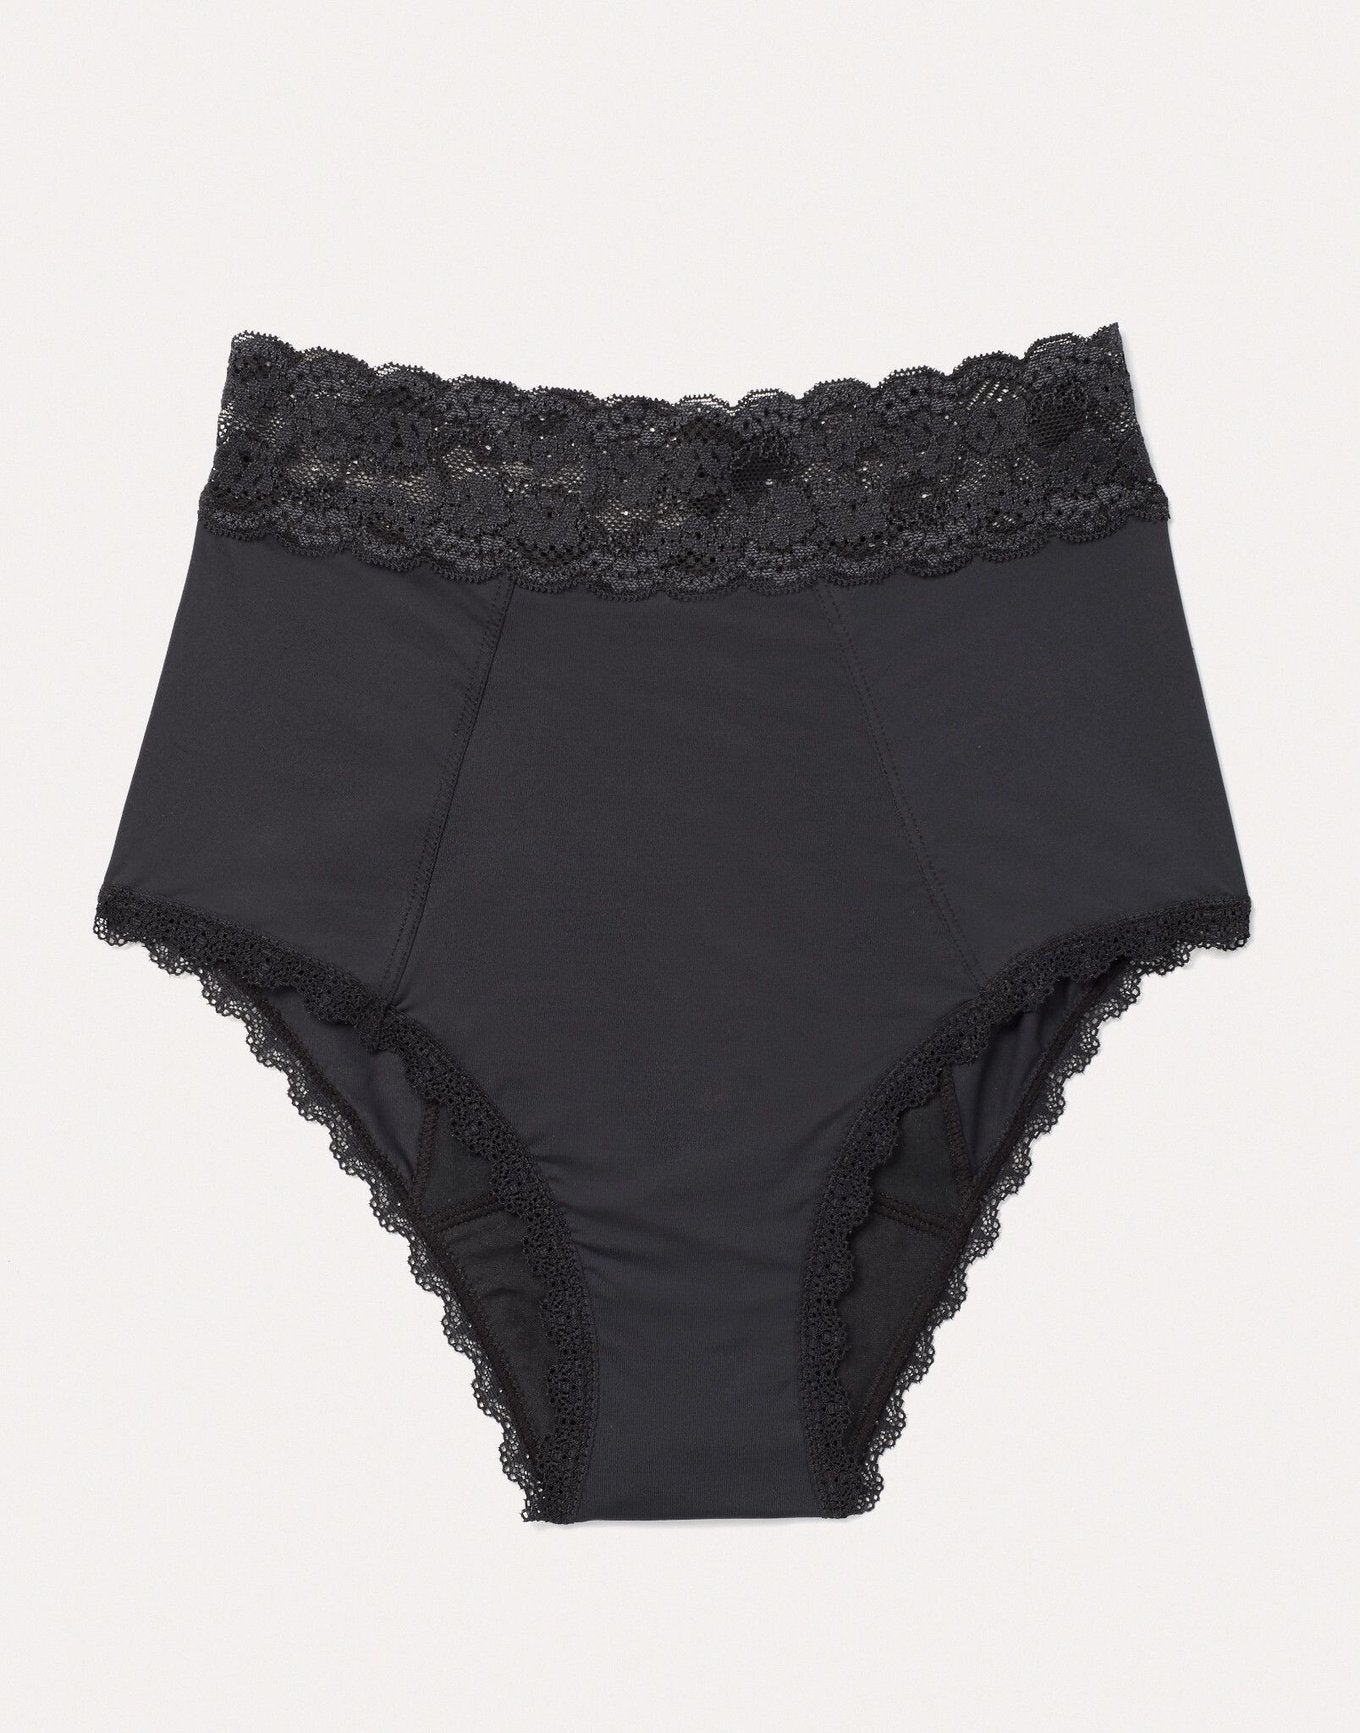 Joyja Amelia period-proof panty in color Jet Black and shape high waisted